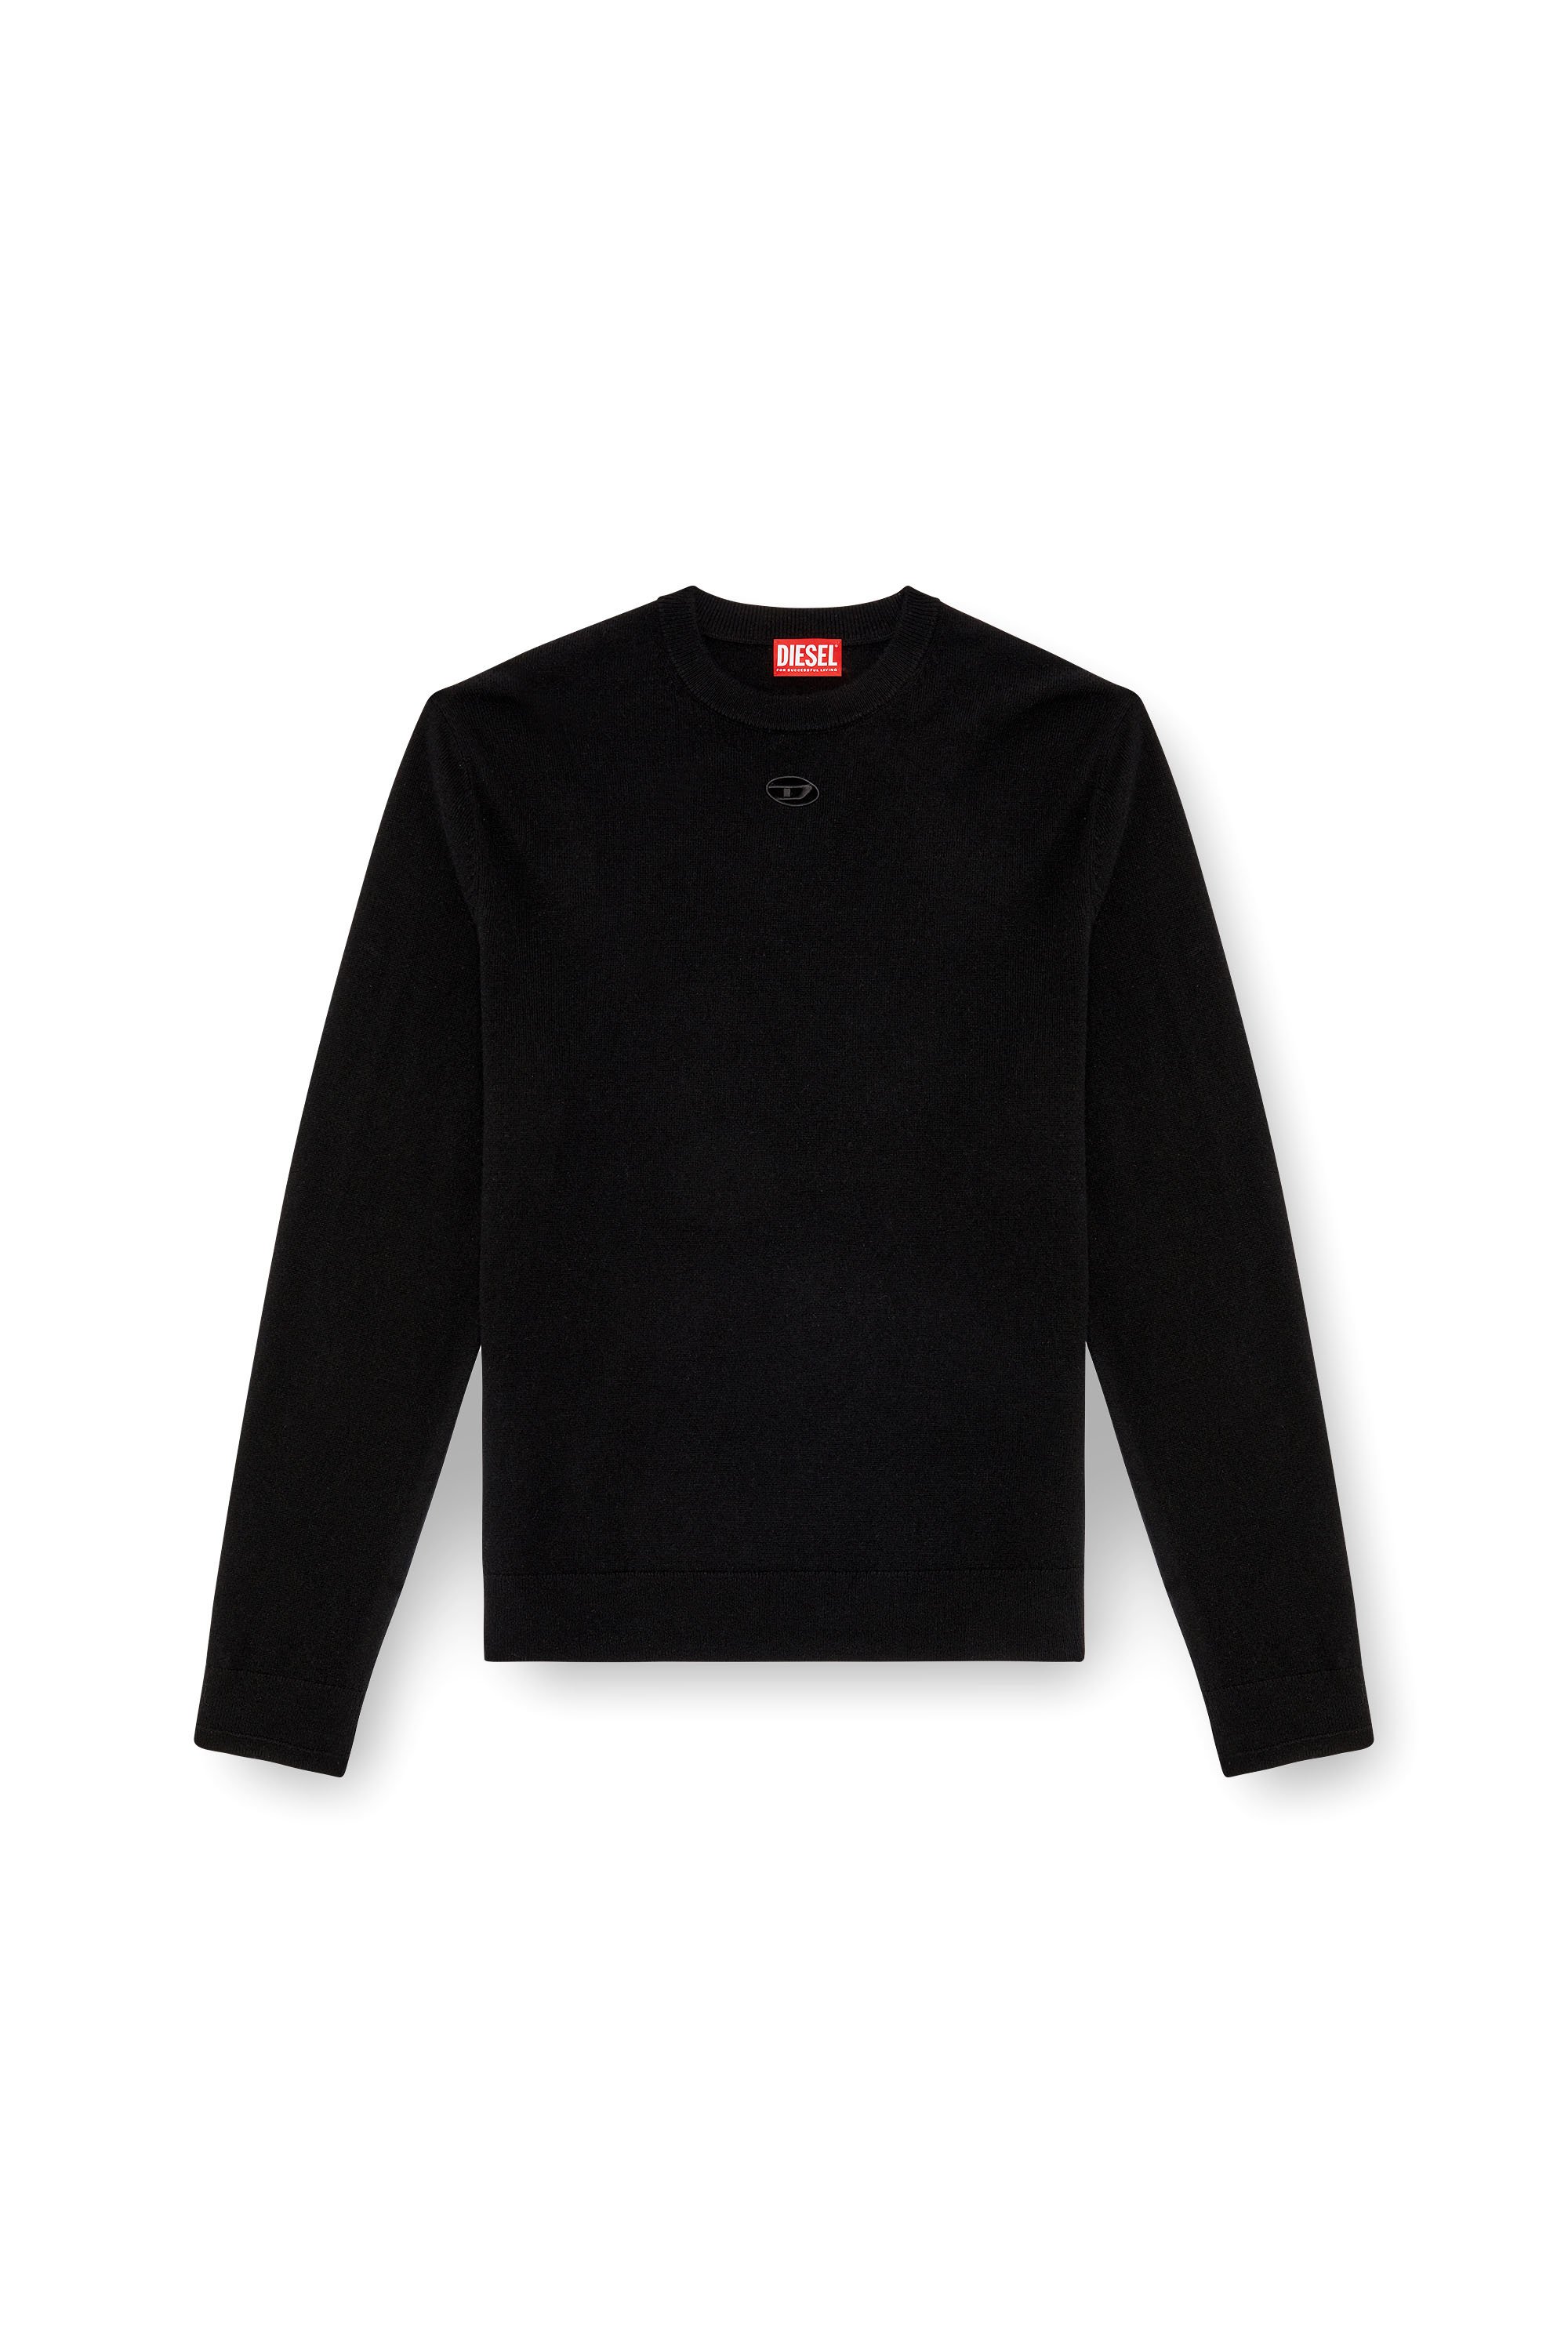 Diesel - K-VIERI, Male Wool and cashmere jumper in Black - Image 3